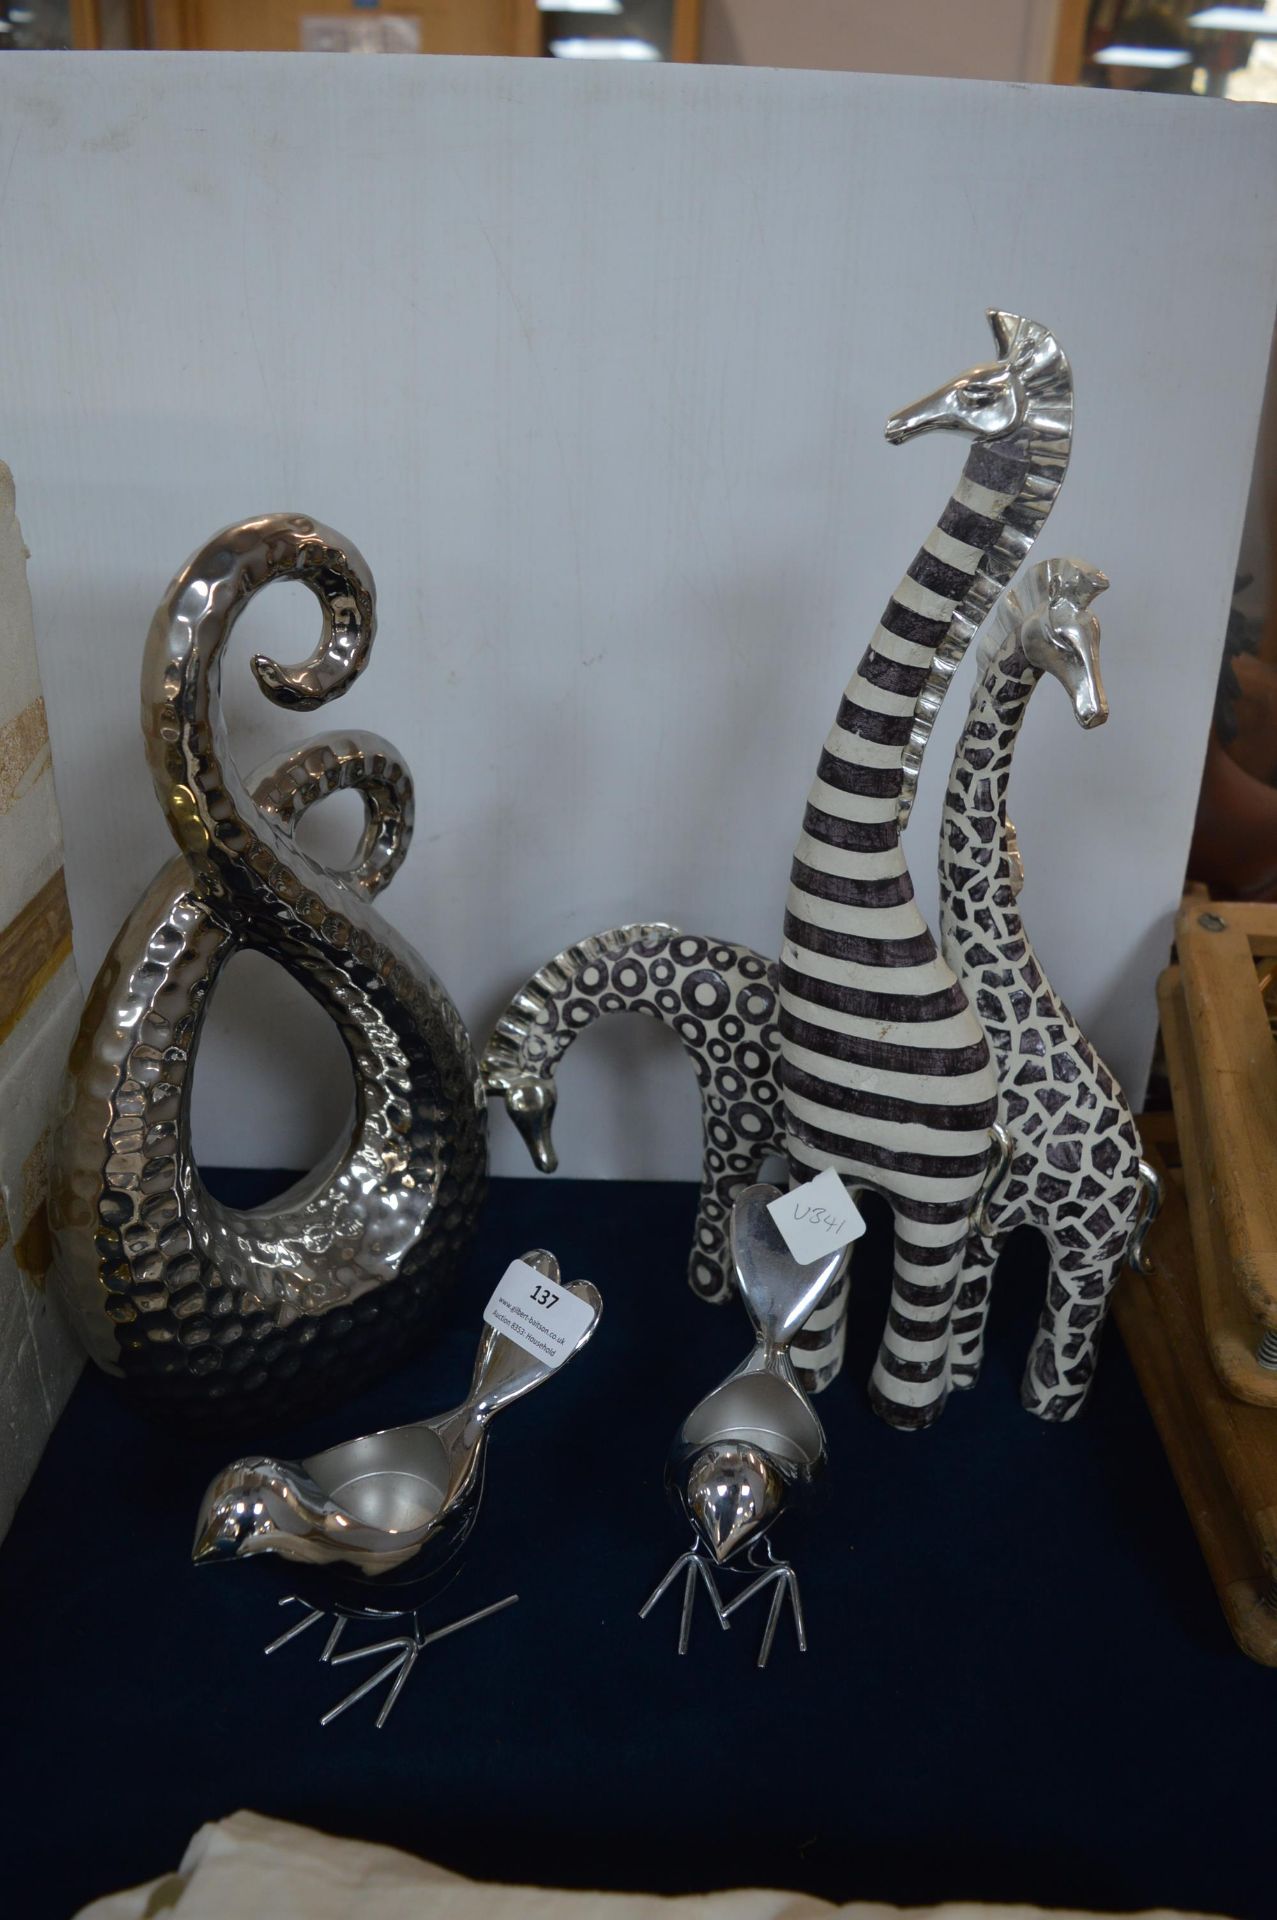 Decorative Ornament; Giraffes, Birds, etc.